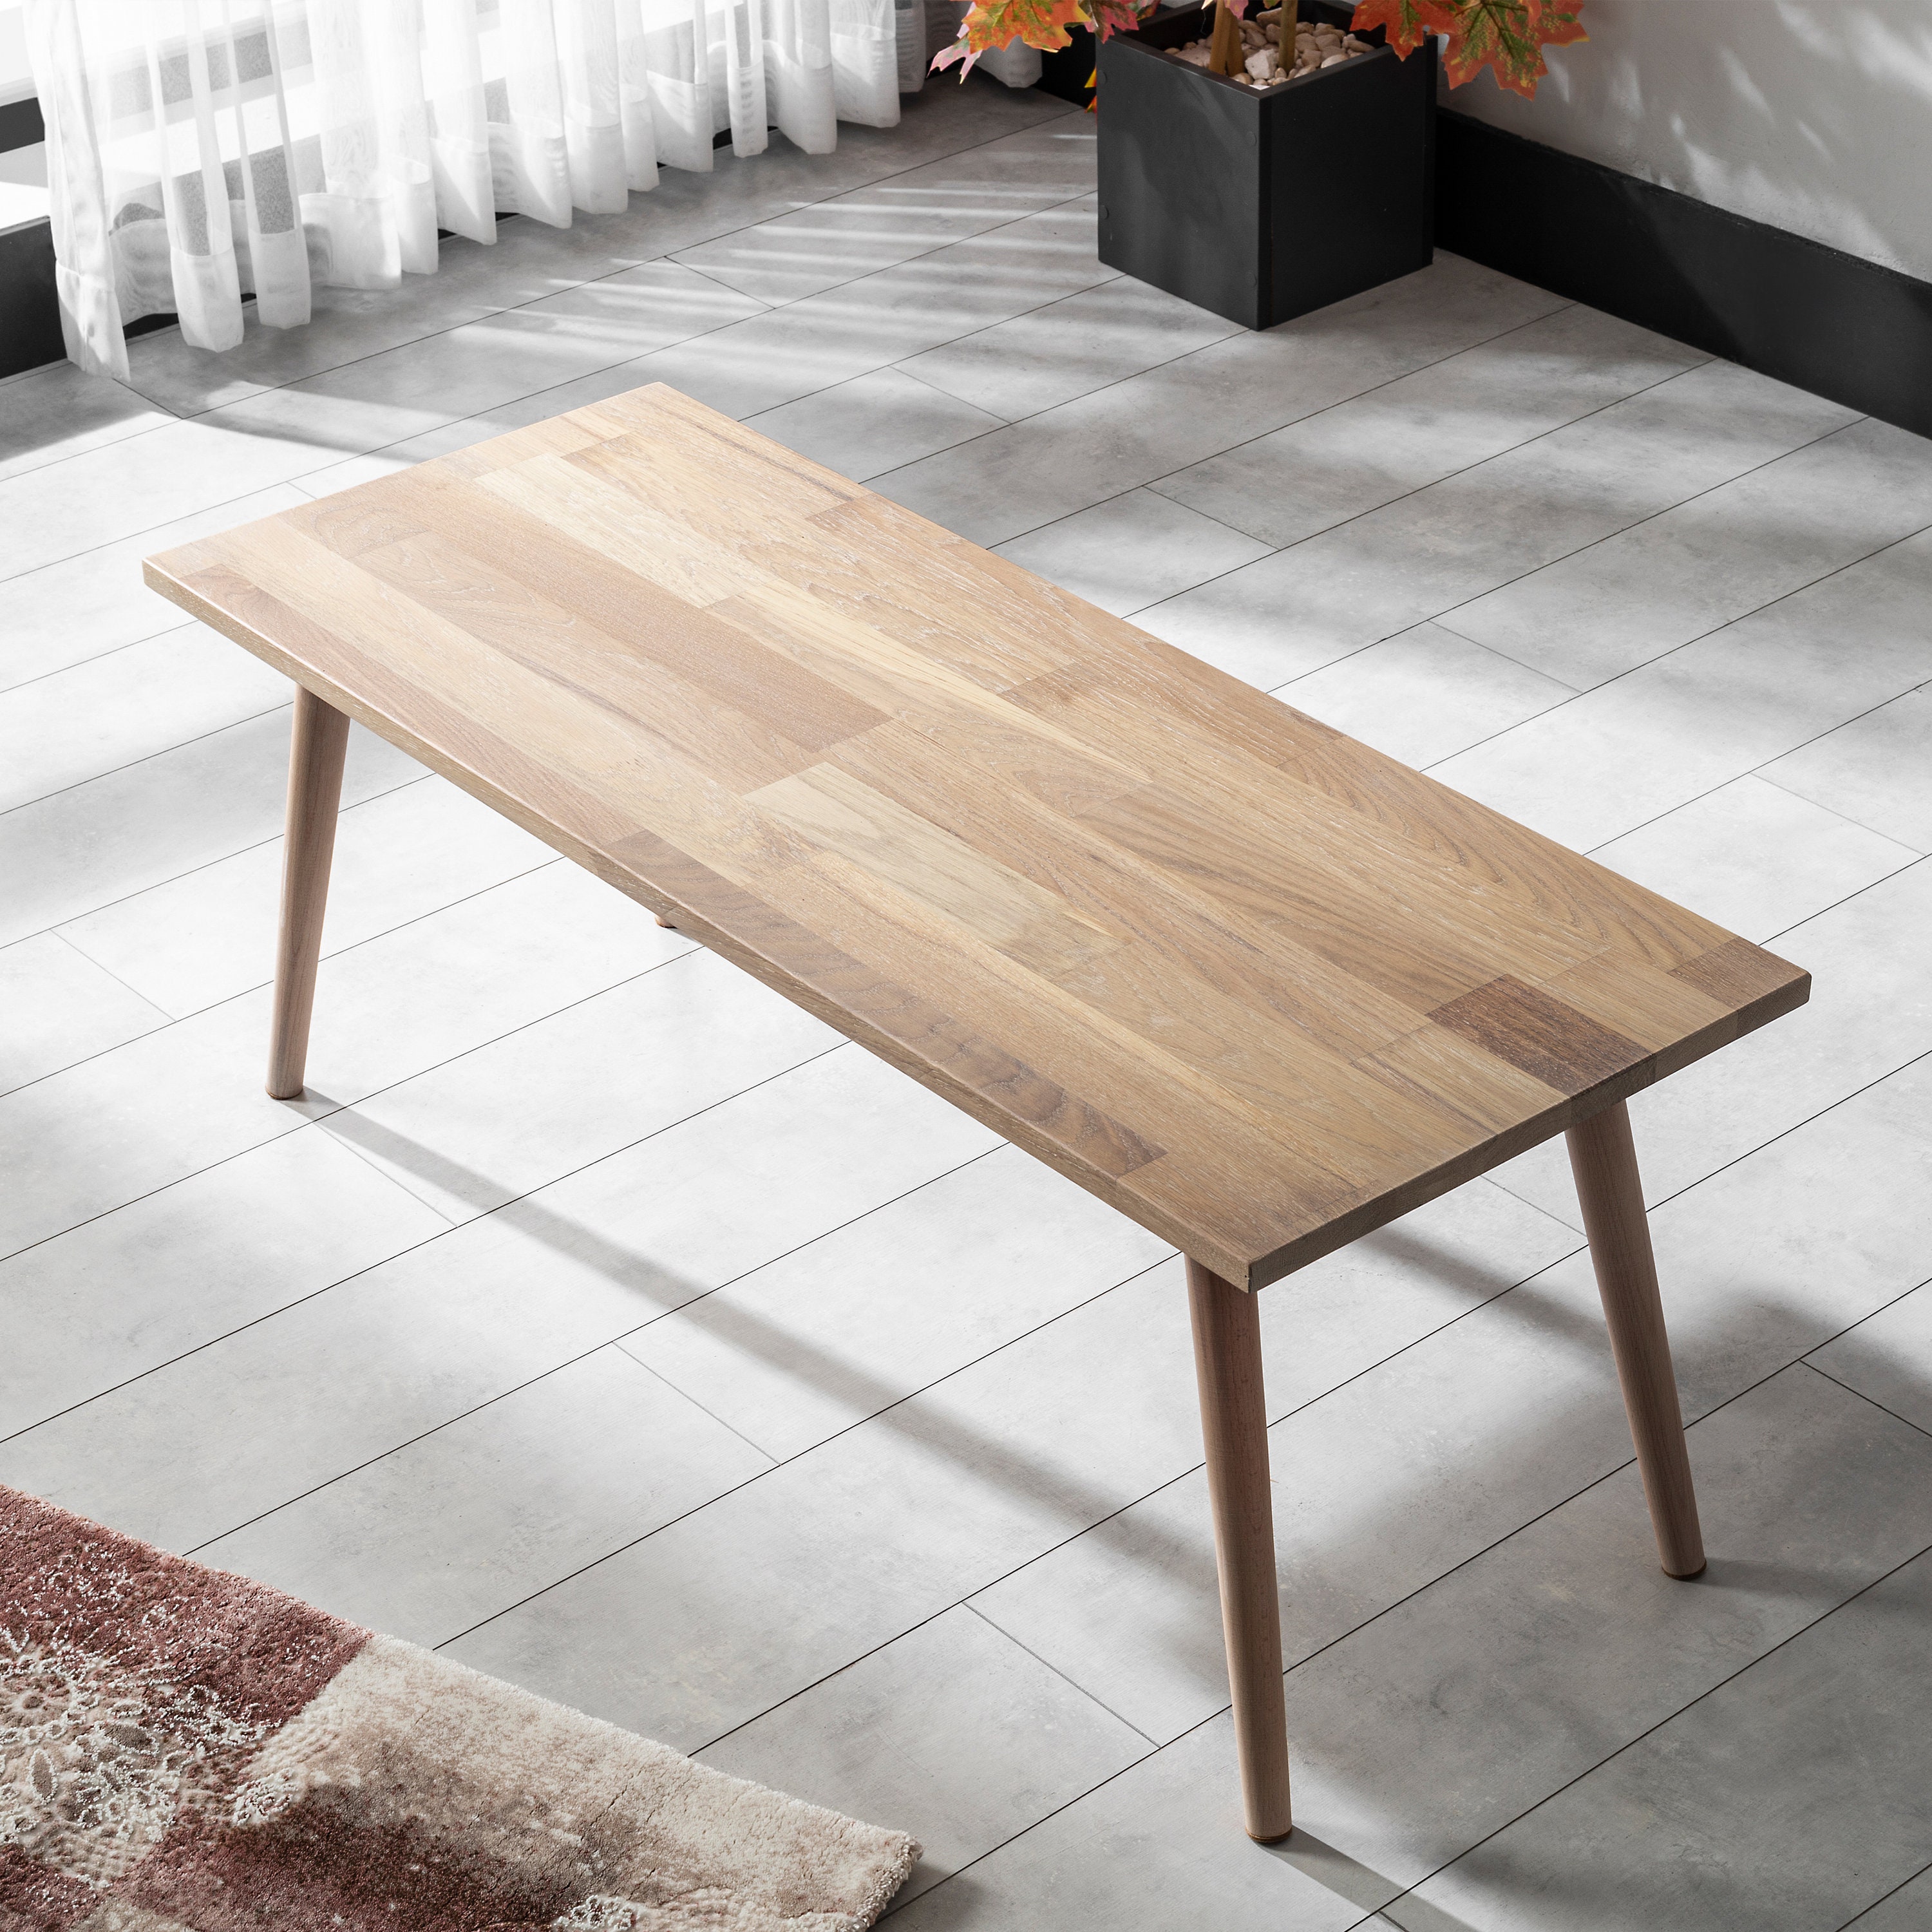 Tablero de madera de pino para mesa comedor 160x80 cm, gran grosor